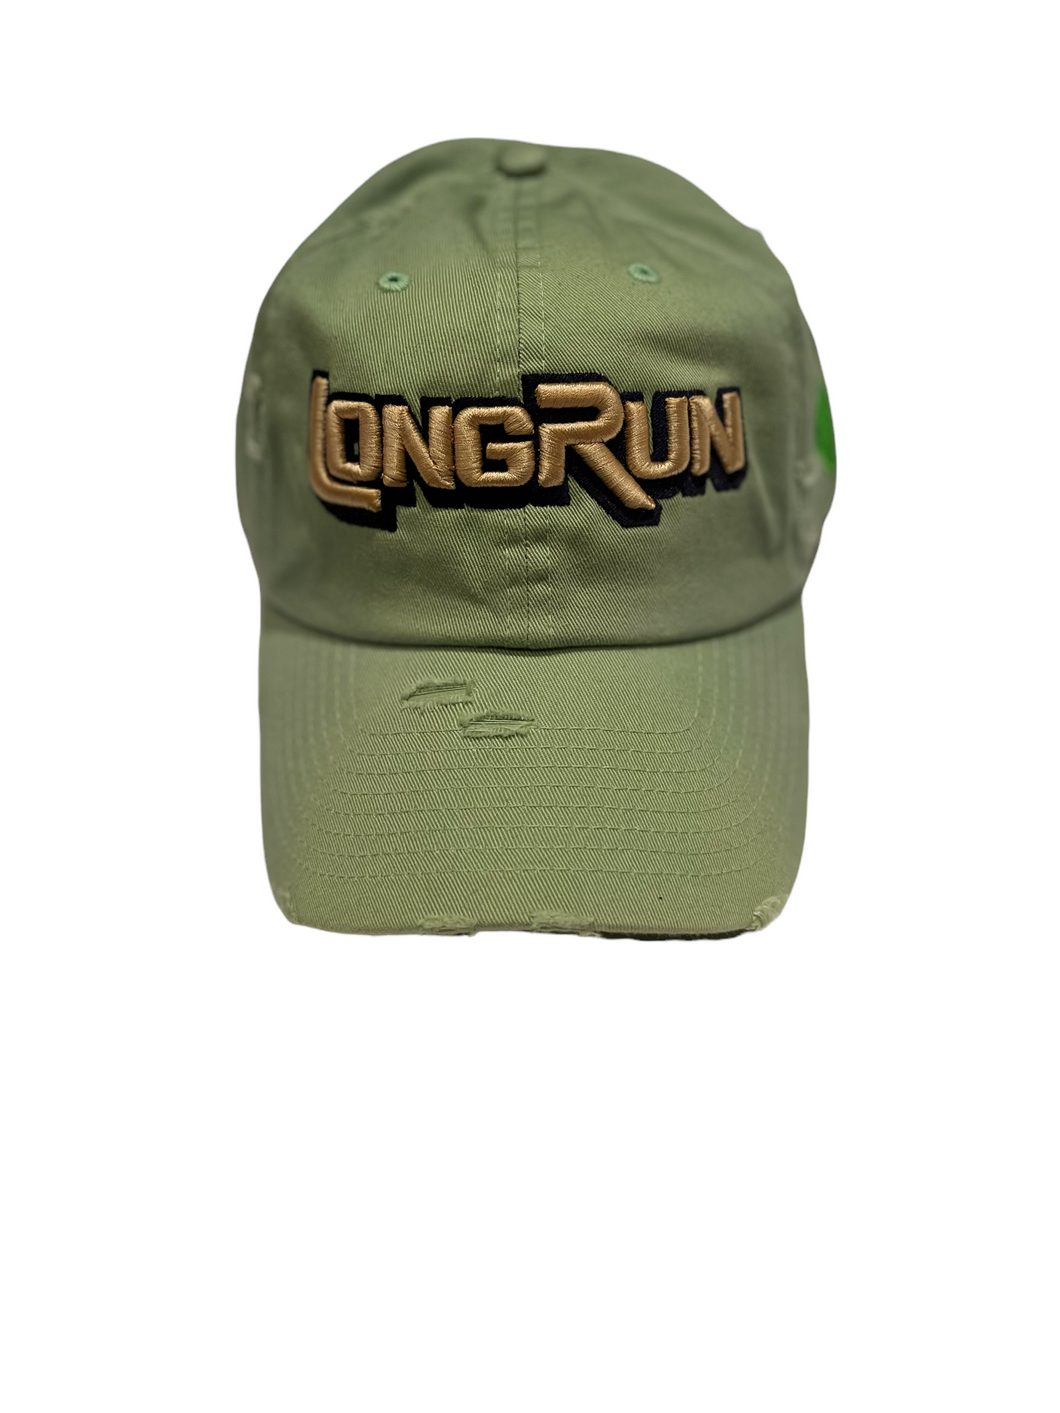 Mint green navy blue & Bone longrun PL dad hat